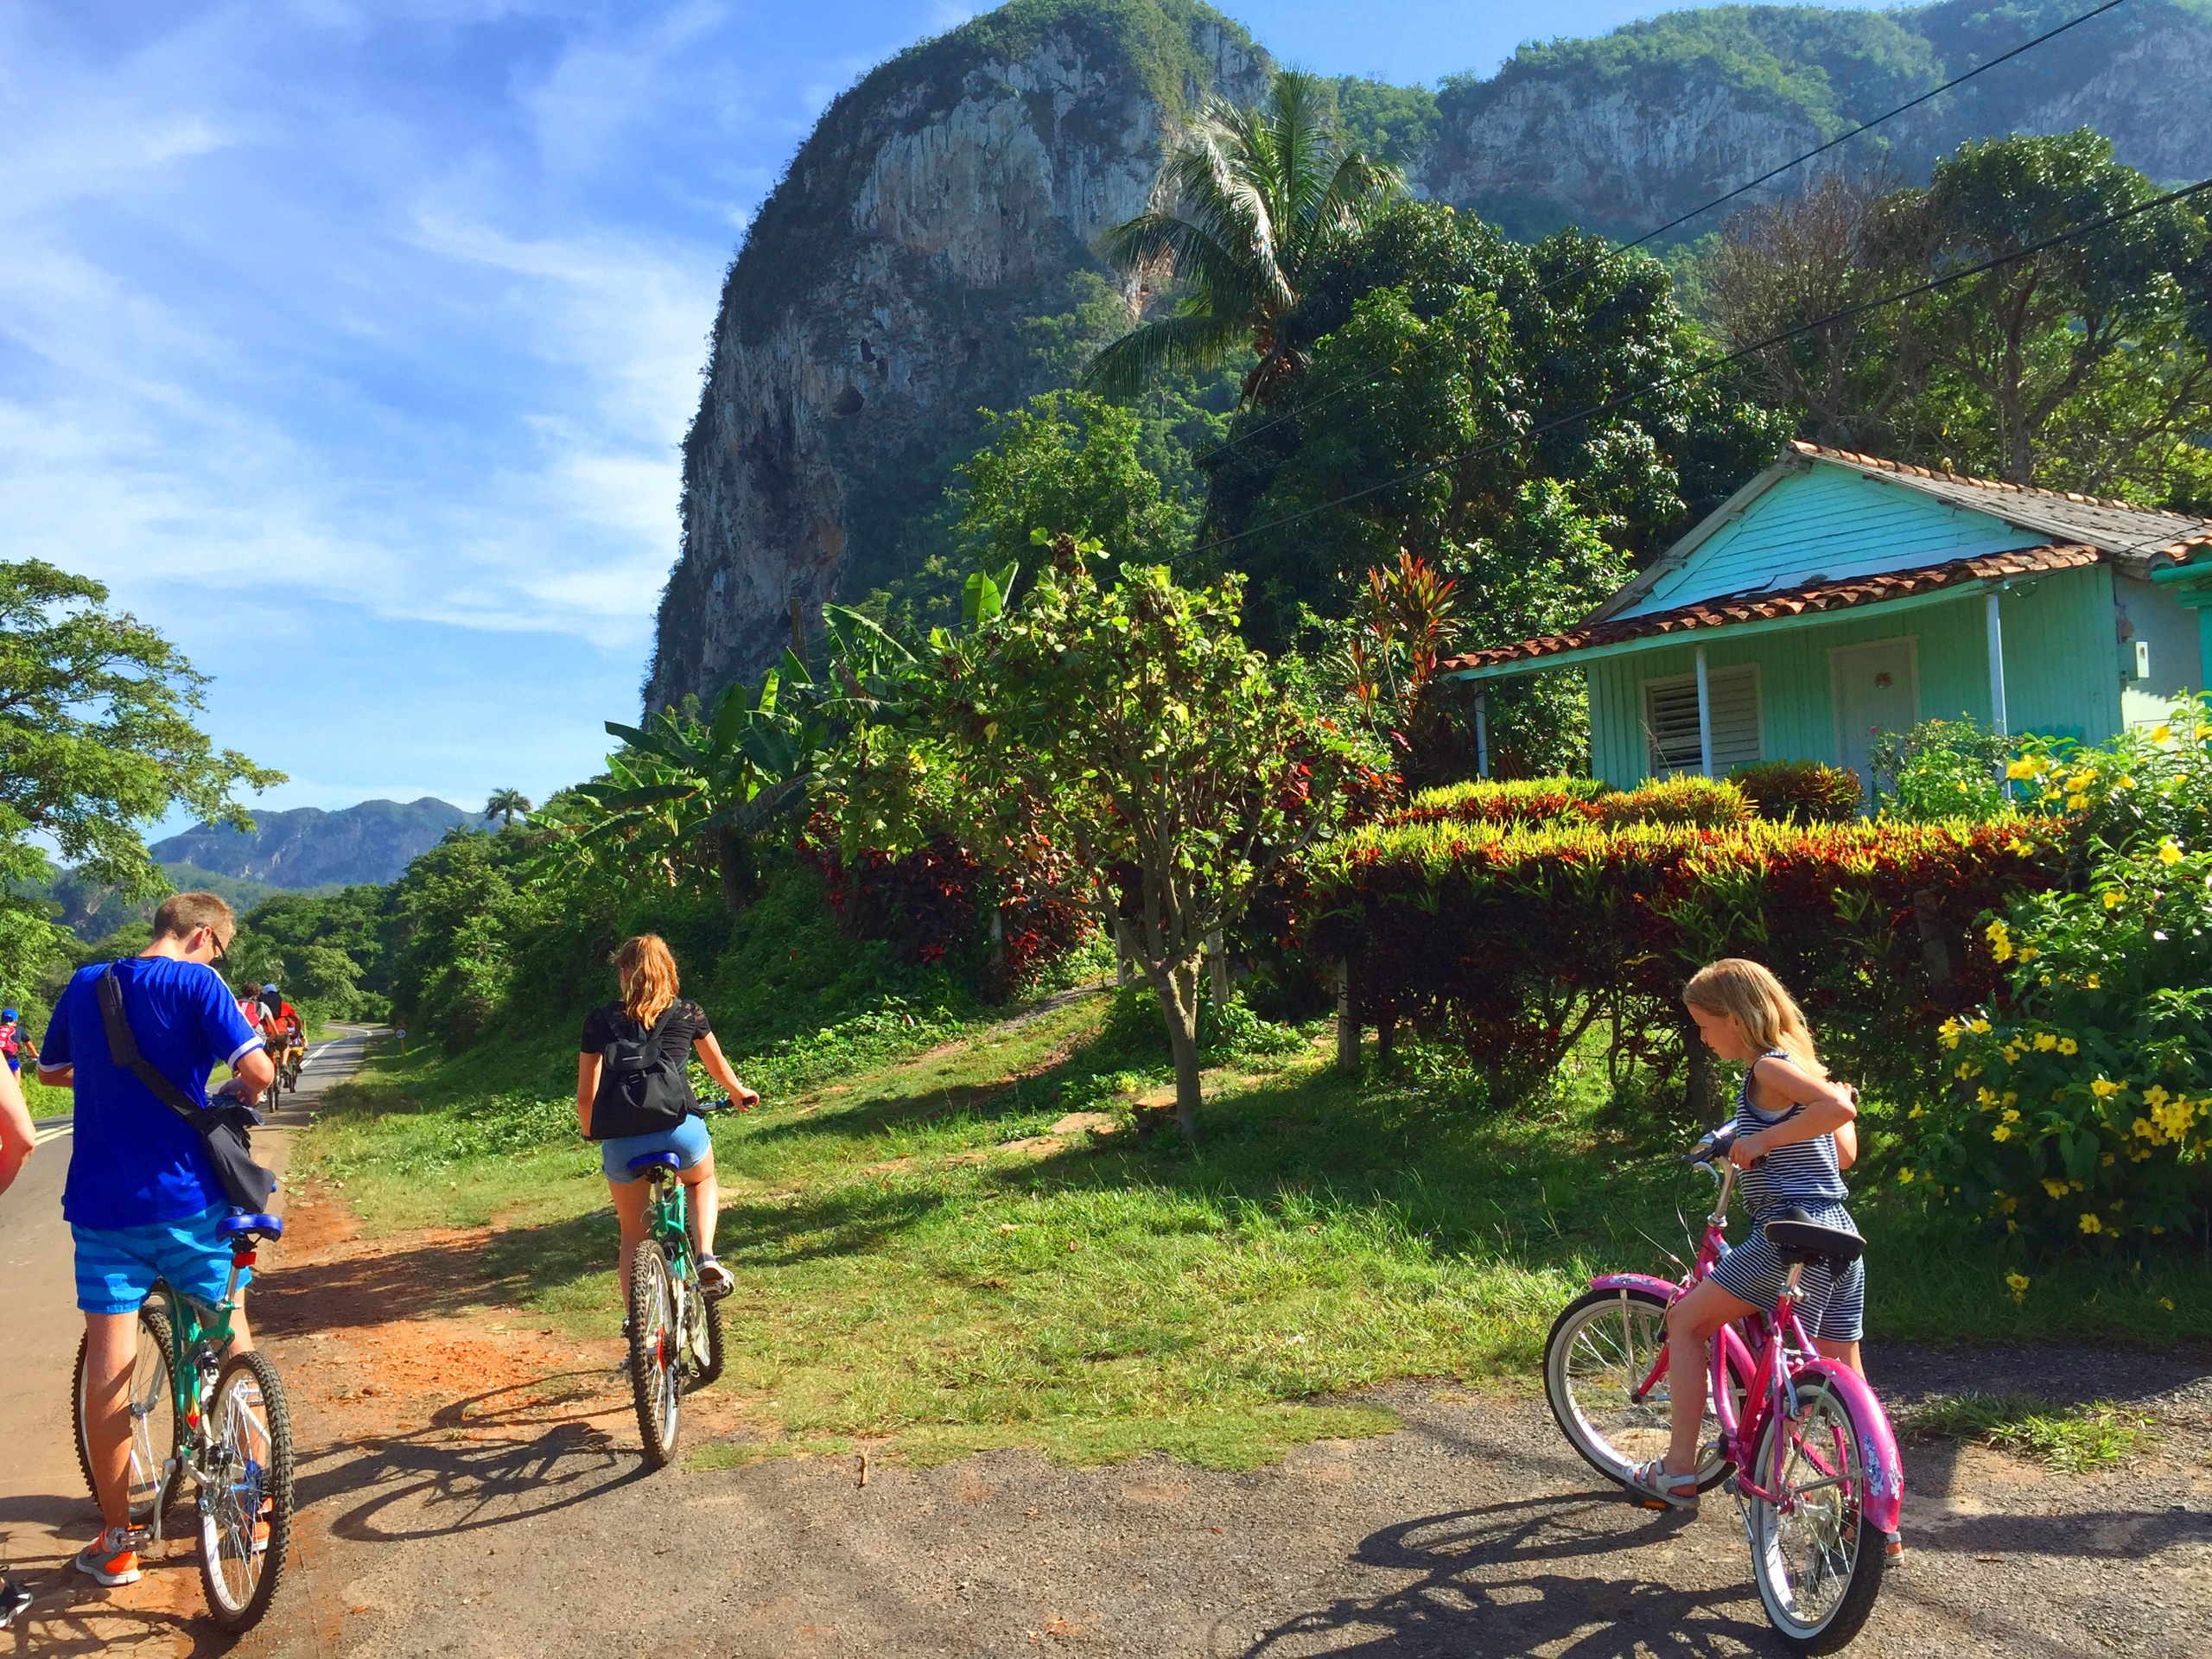 Cykelferie i Cuba - Nyd Cubas smukke landskab tæt på